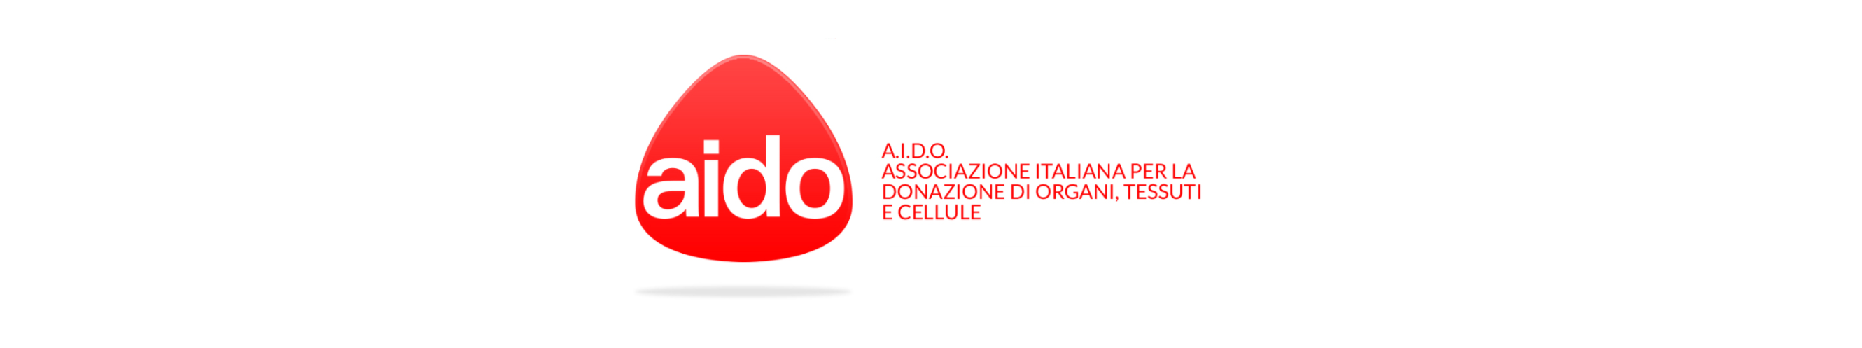 A.I.D.O. - Associazione Italiana Donatori Organi, tessuti e cellule ONLUS - logo